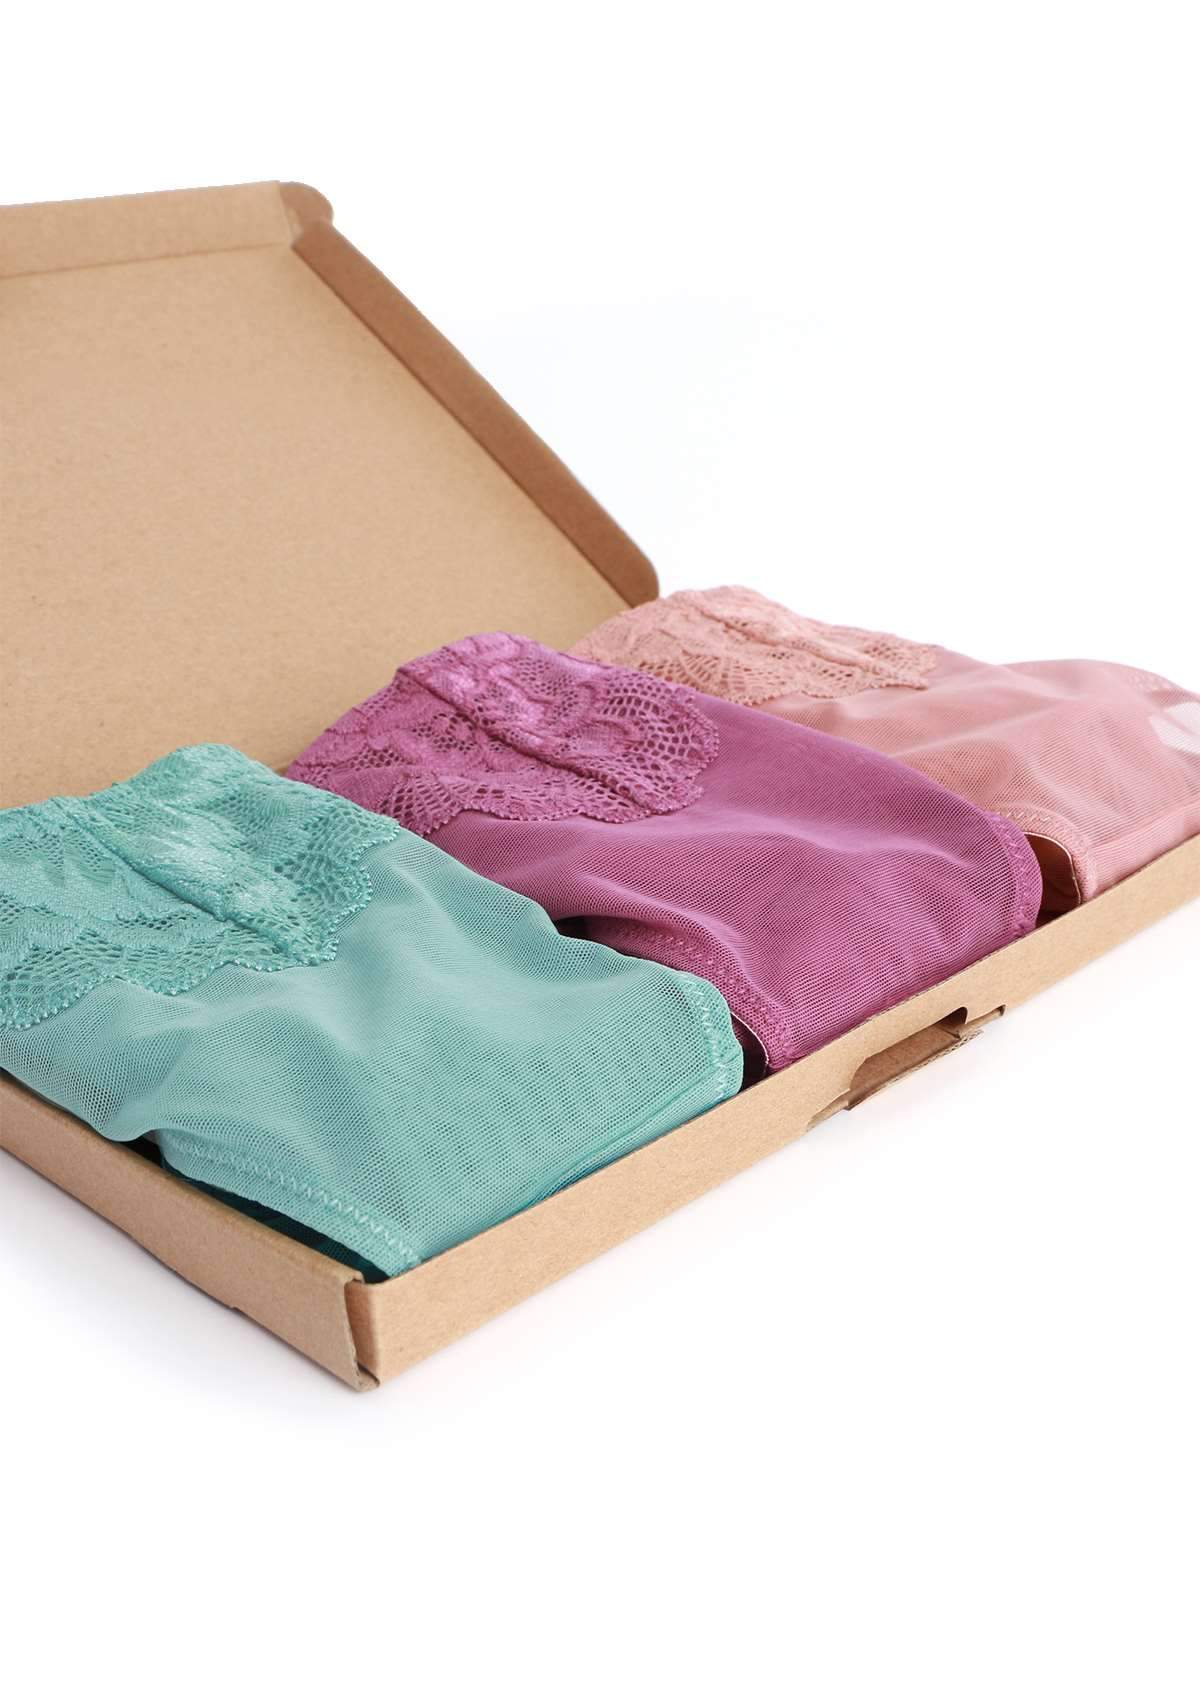 HSIA Peony Lace Mesh Everyday Bikini Underwear 3 Pack - M / Light Coral+Green+Purple